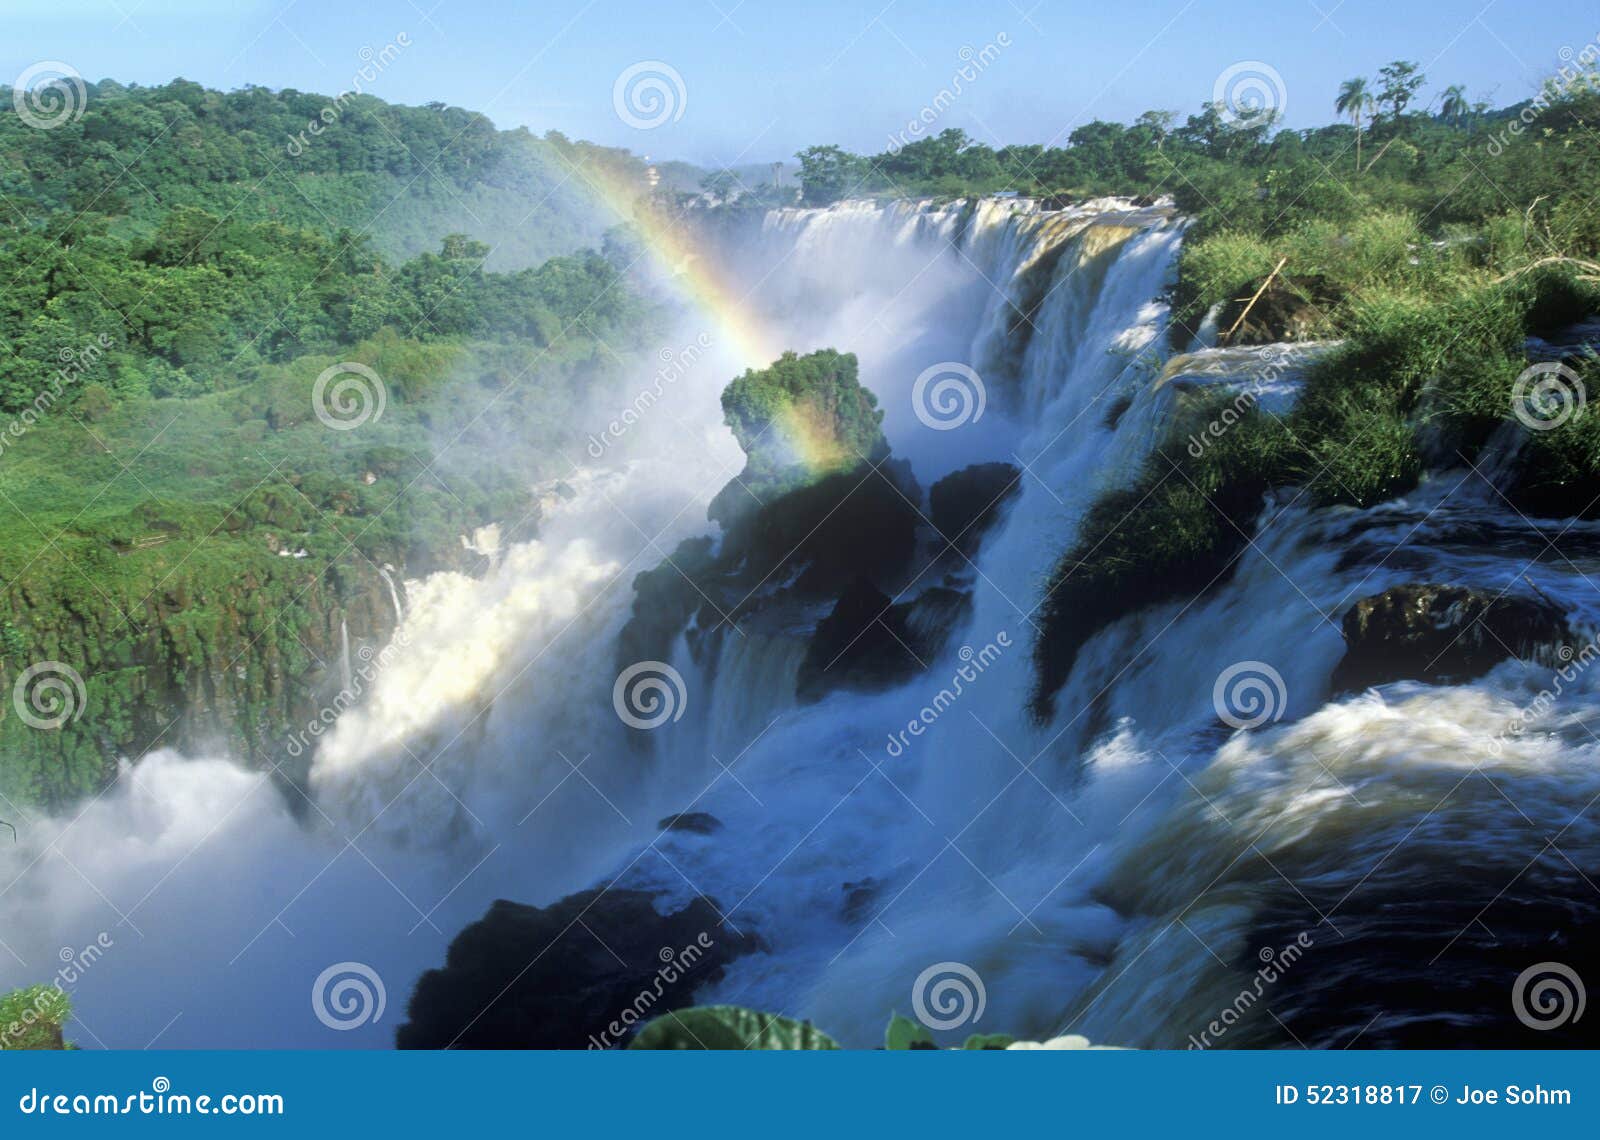 rainbow over iguazu waterfalls in parque nacional iguazu viewed from upper circuit, border of brazil and argentina